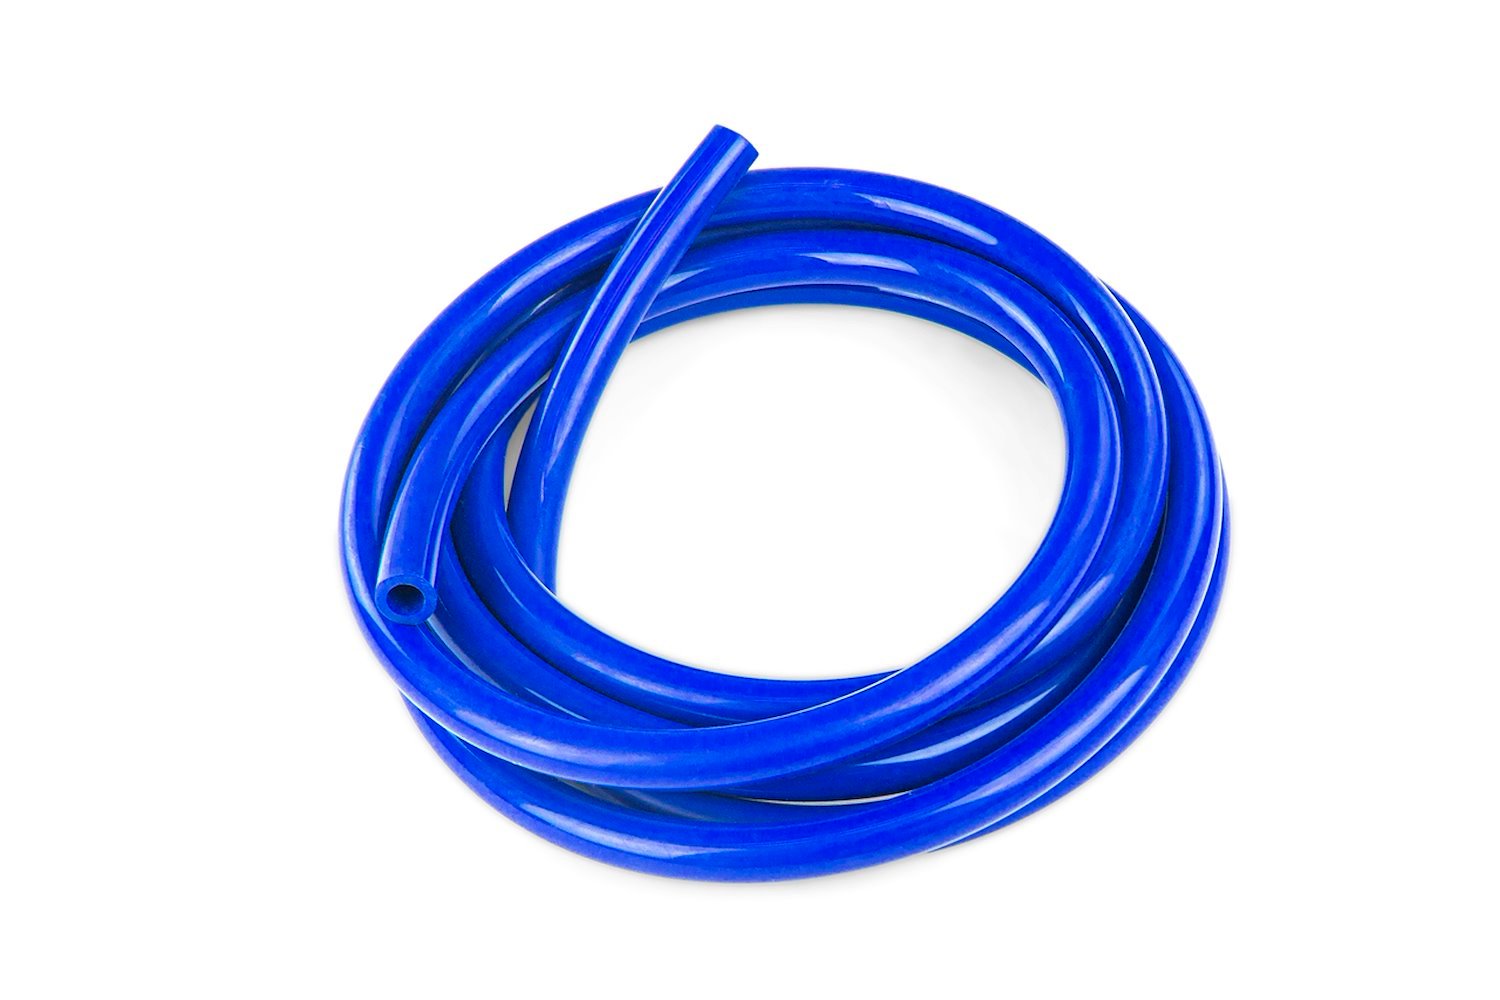 HTSVH5-BLUEx5 High-Temperature Silicone Vacuum Hose Tubing, 13/64 in. ID, 5 ft. Roll, Blue